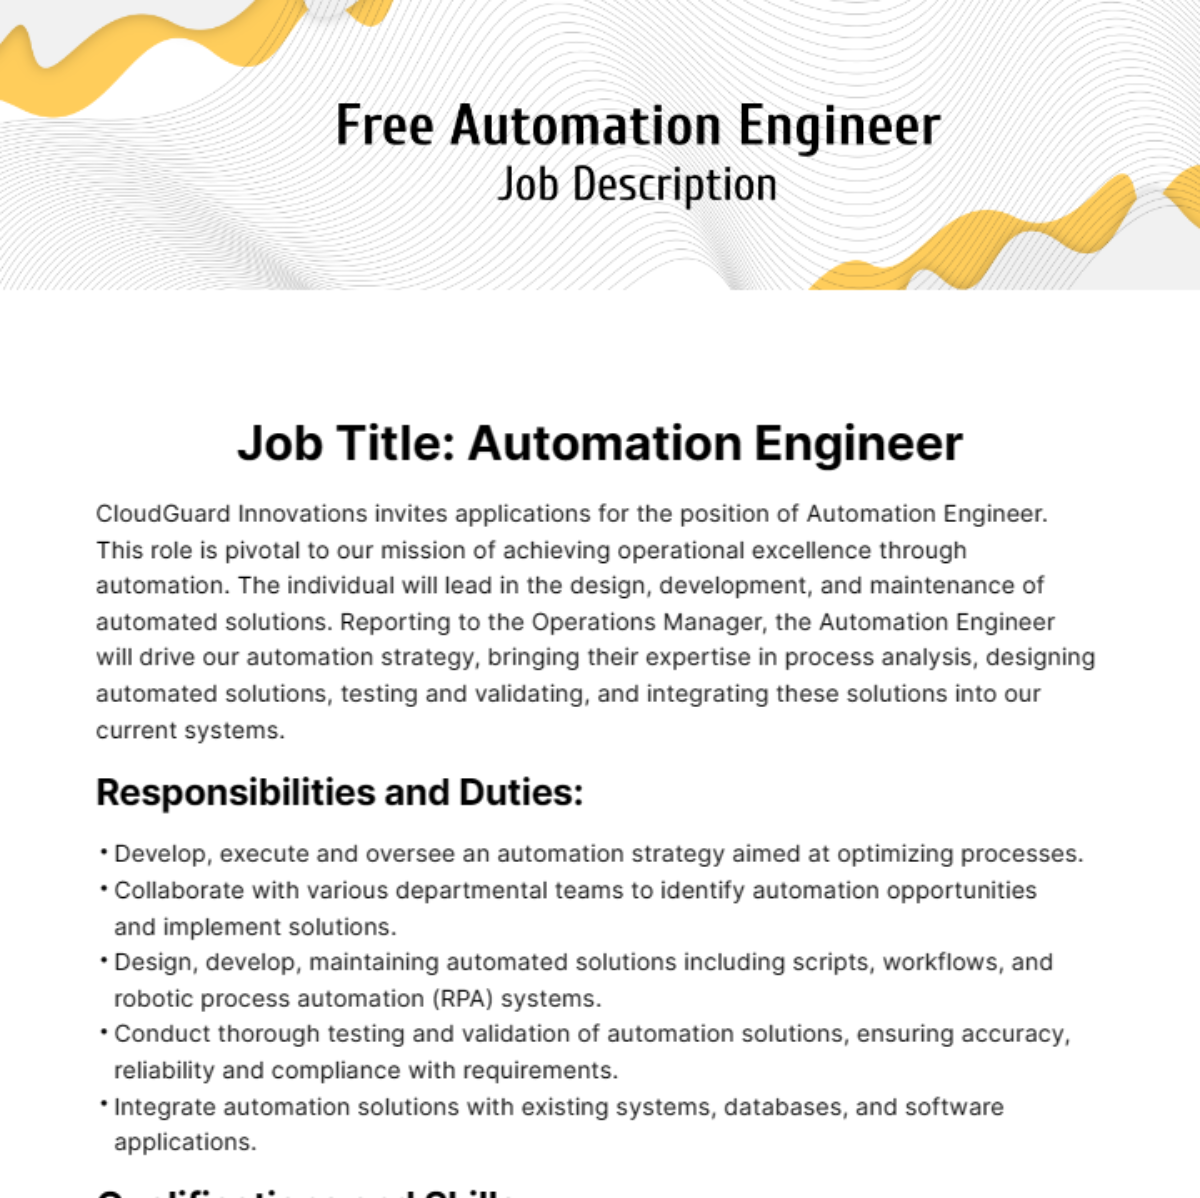 Free Automation Engineer Job Description Template